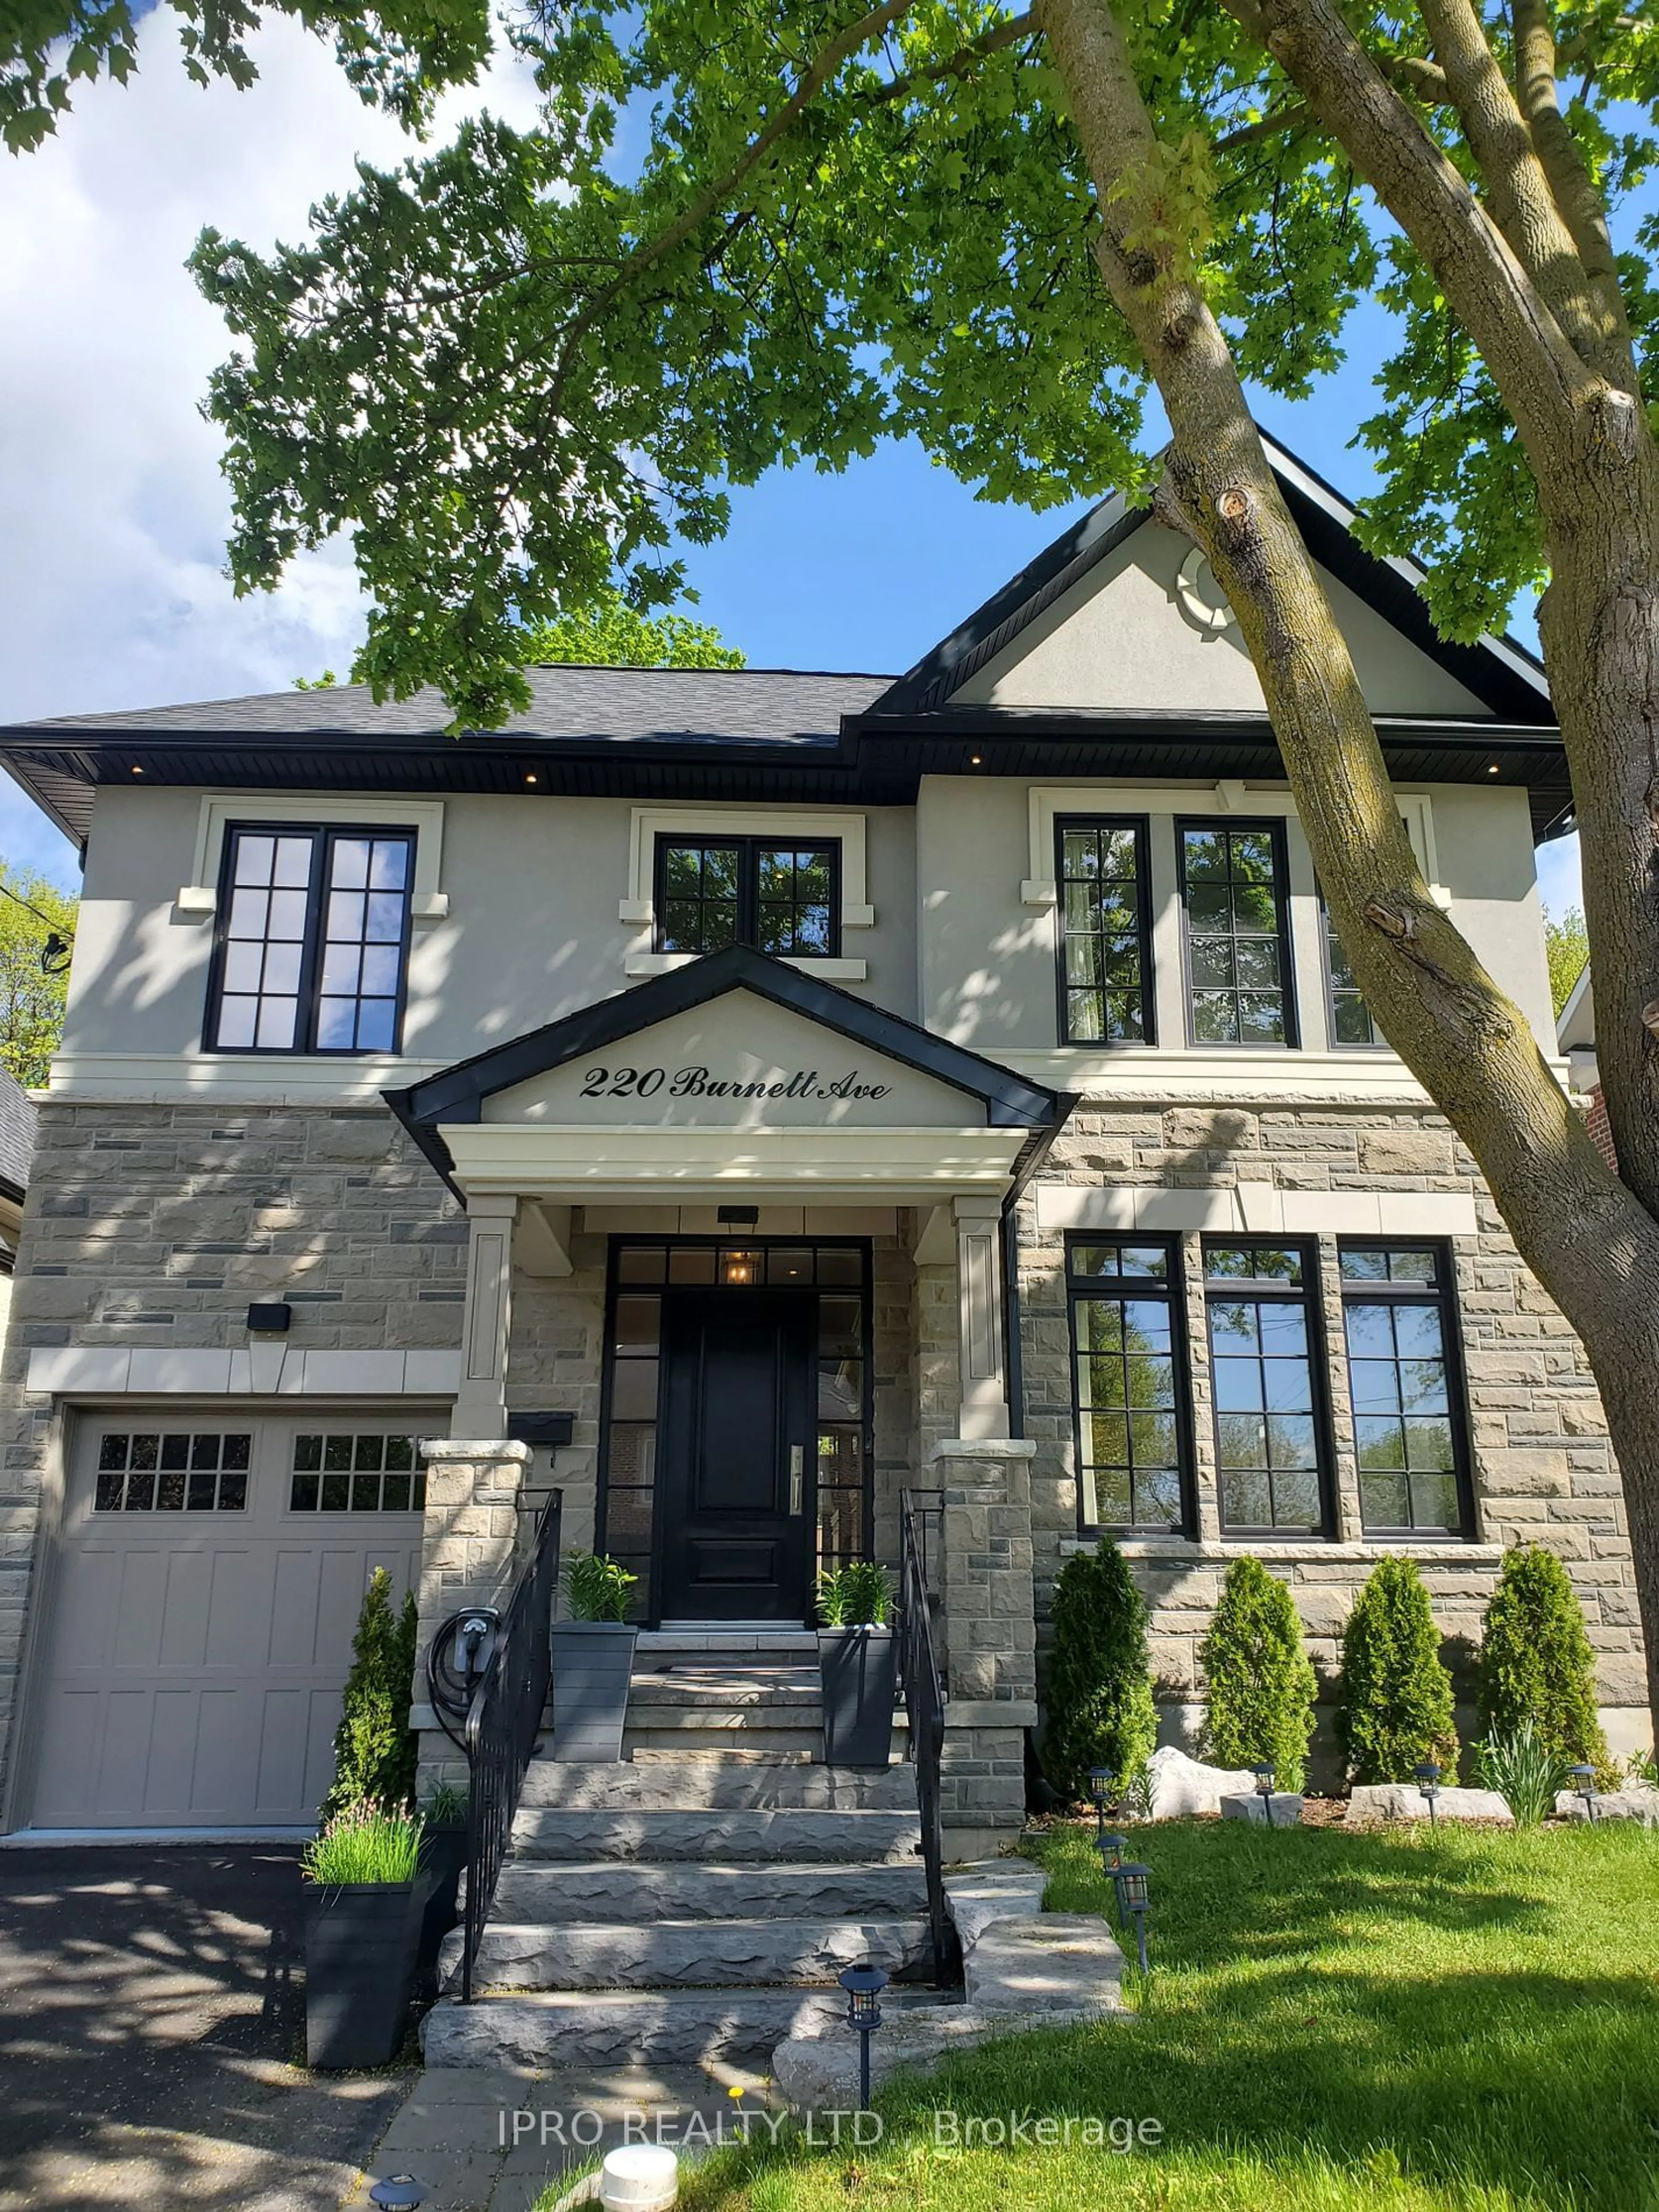 Home with brick exterior material for 220 Burnett Ave, Toronto Ontario M2N 1V8